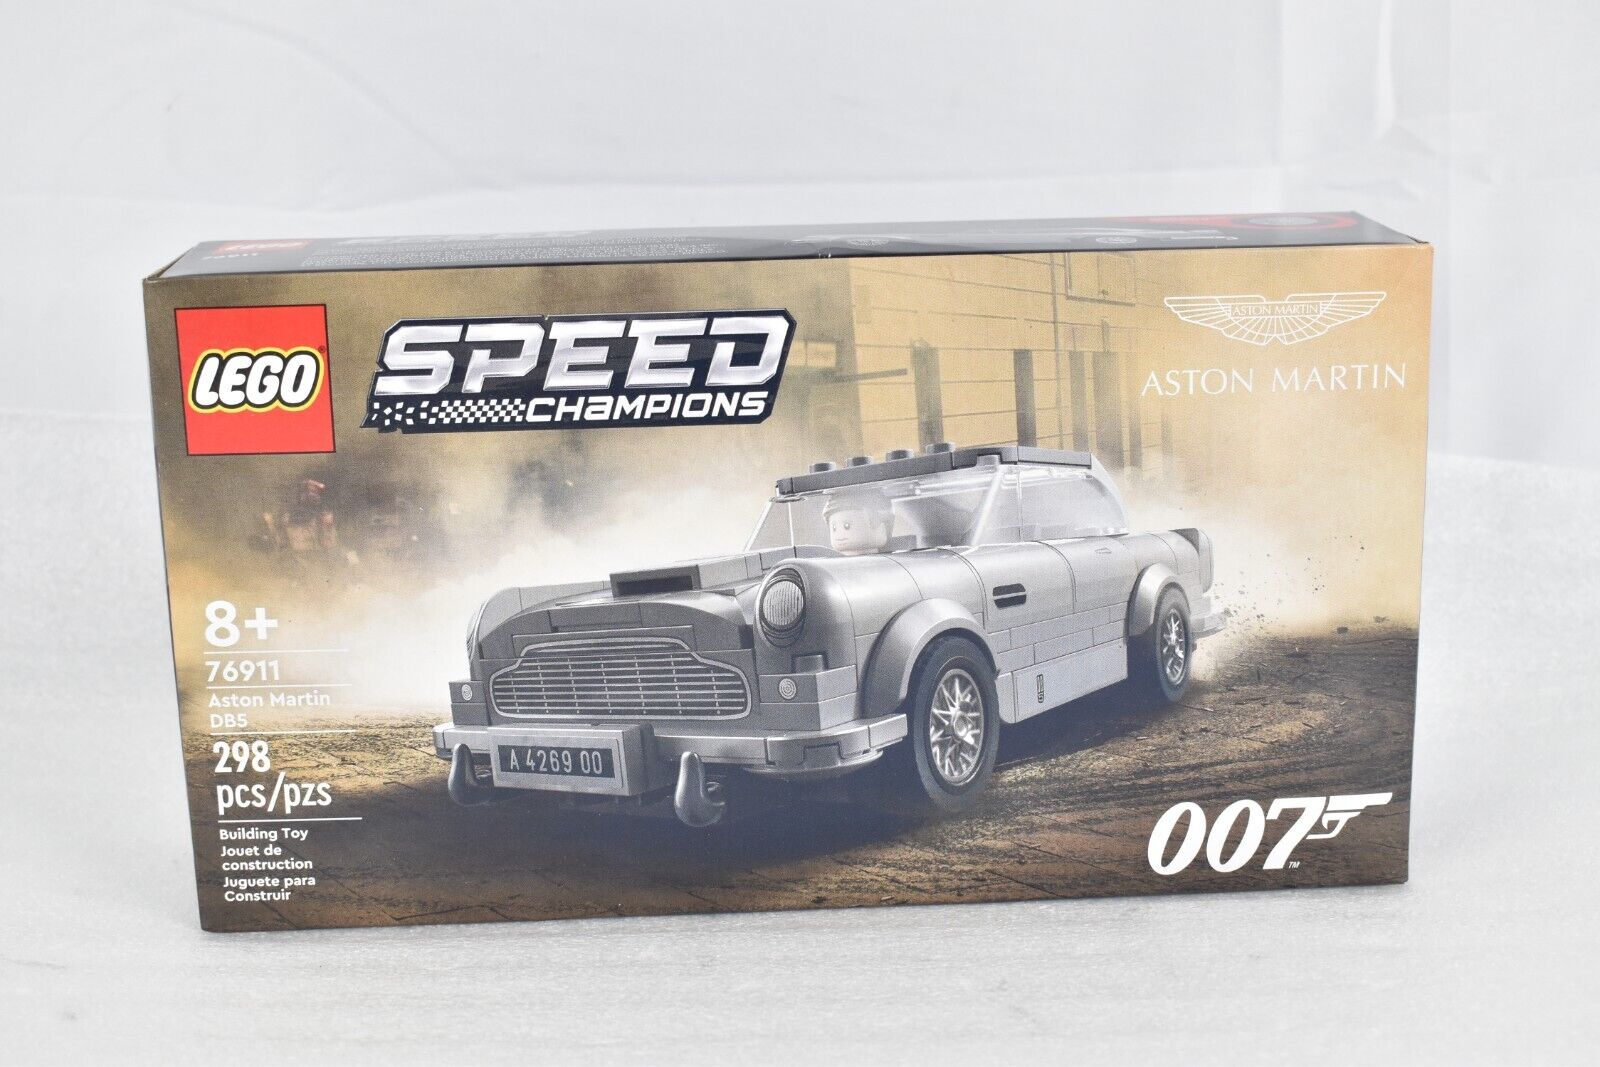 LEGO Speed Champions 007 Aston Martin DB5 76911 Toy Building Set - 298 Pieces 